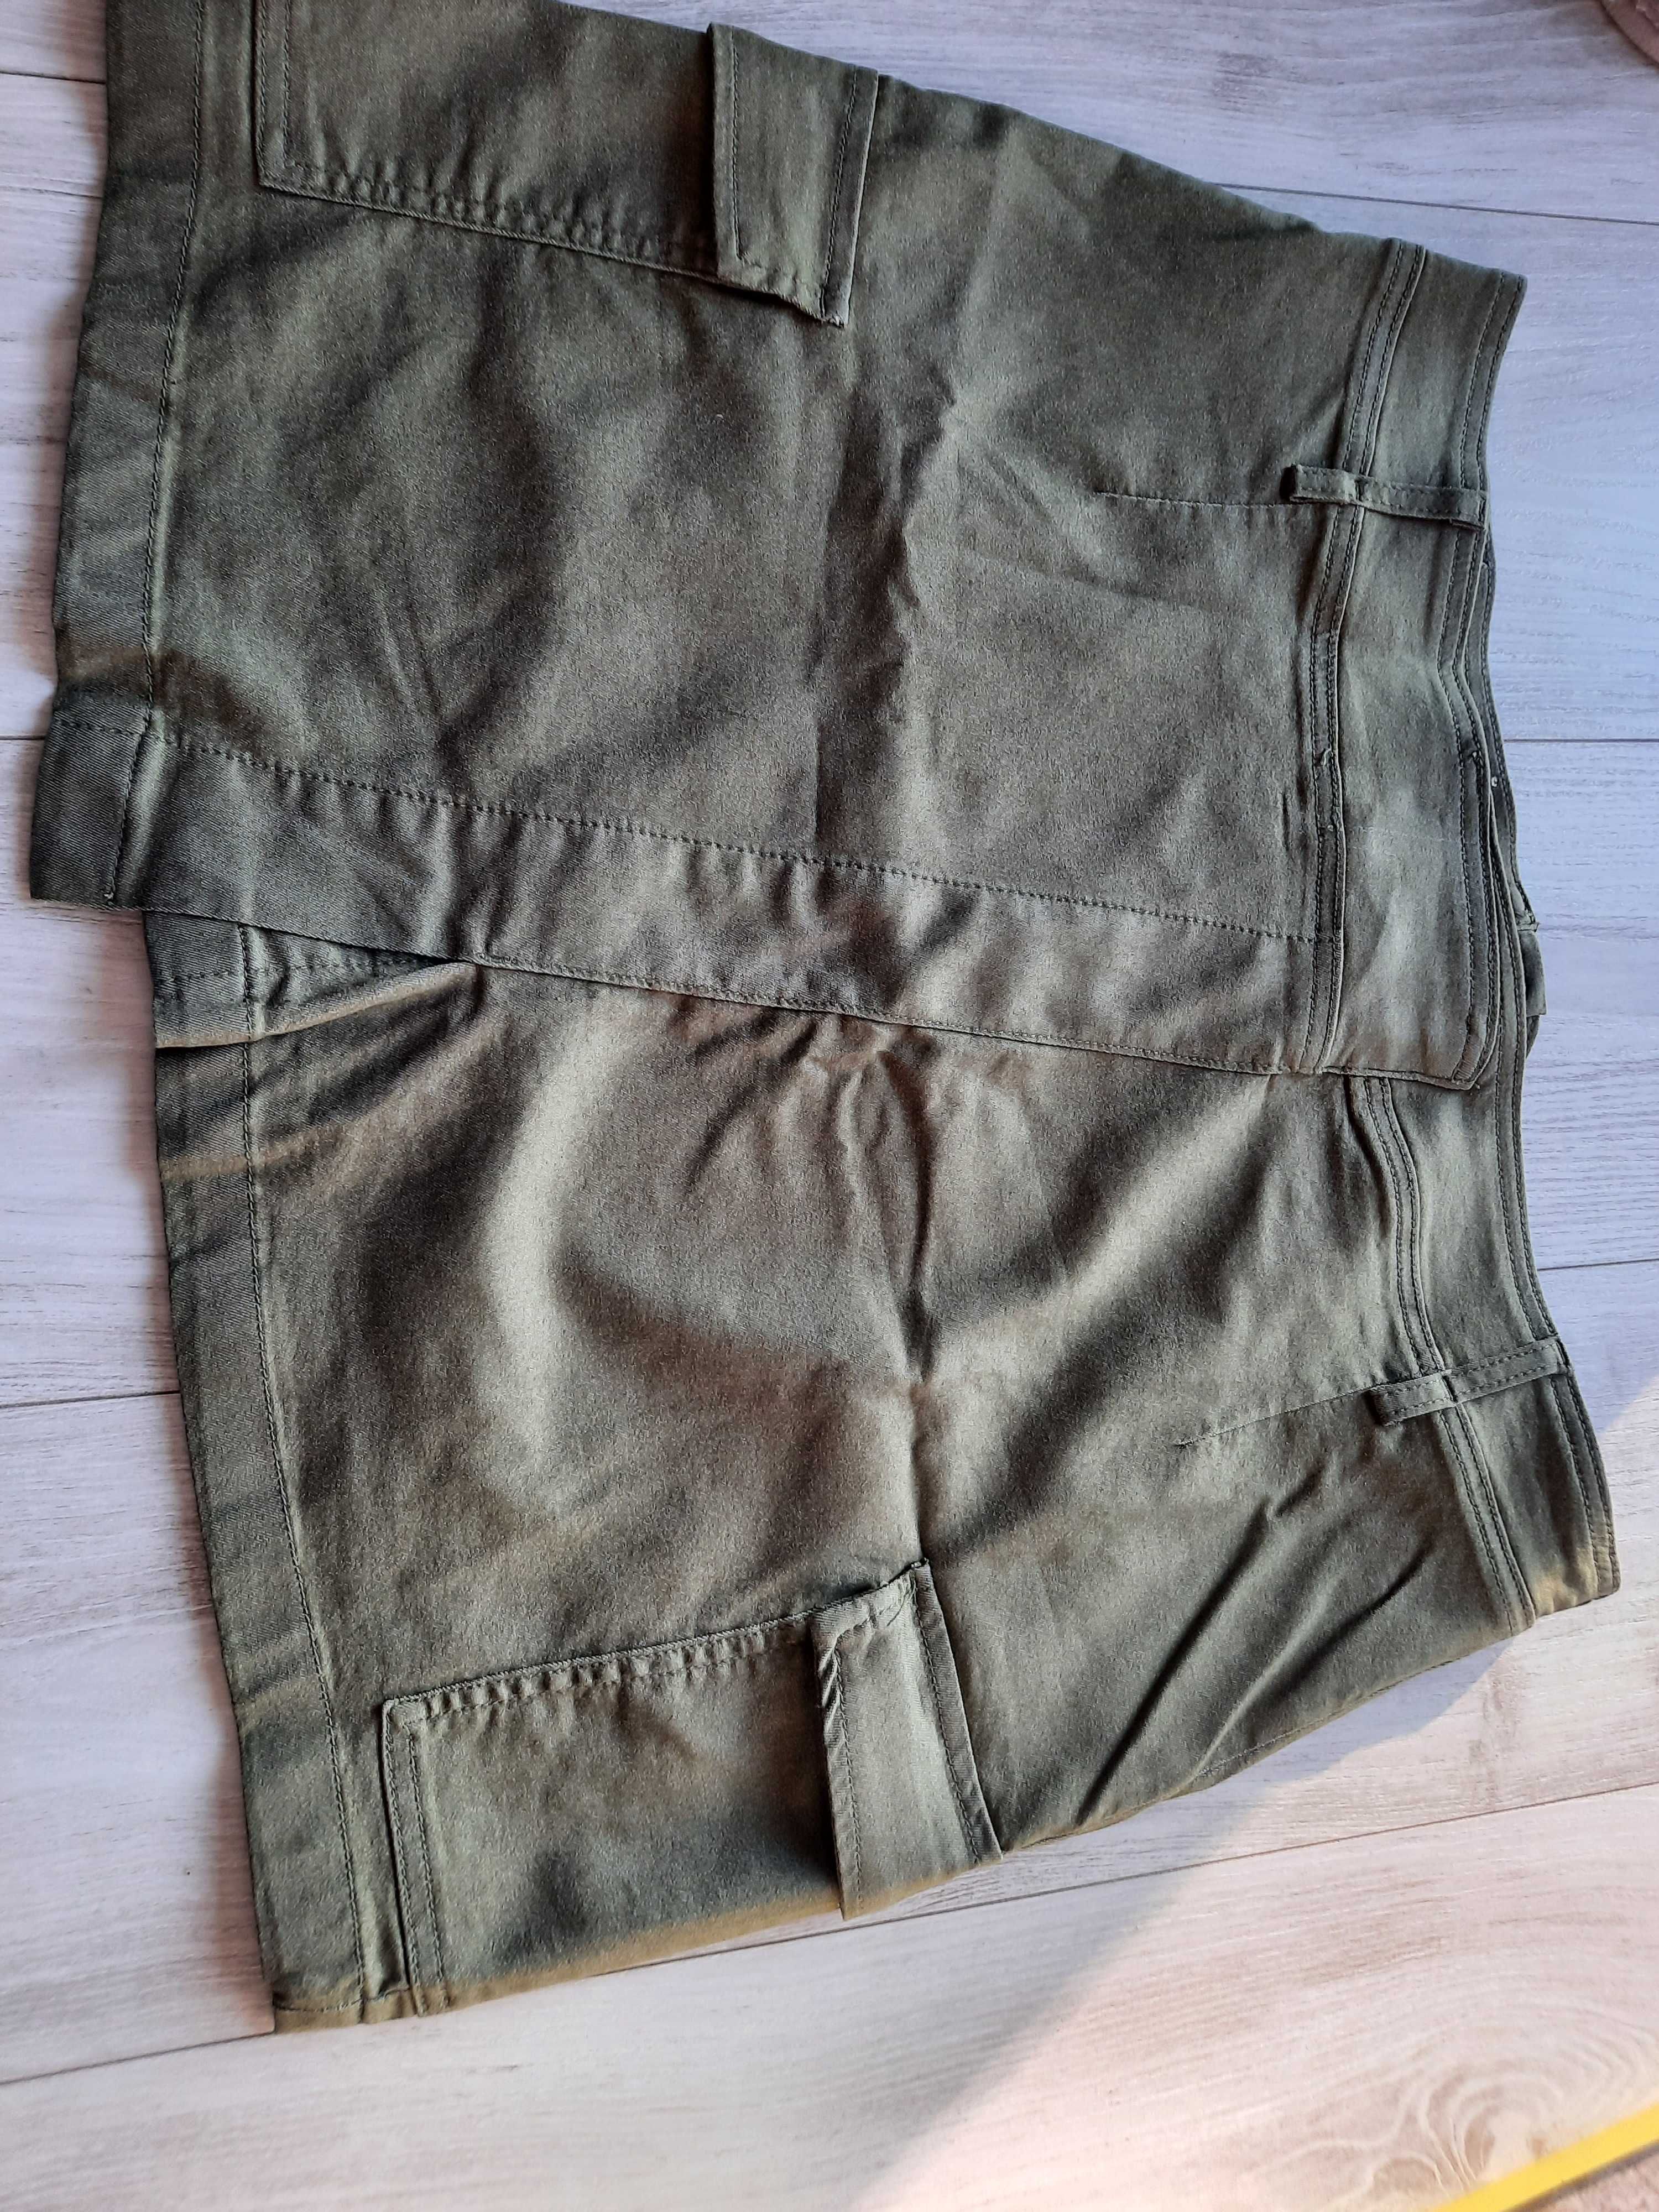 Spodnica damska mini z kieszeniami rozmiar 46 kolor oliwka